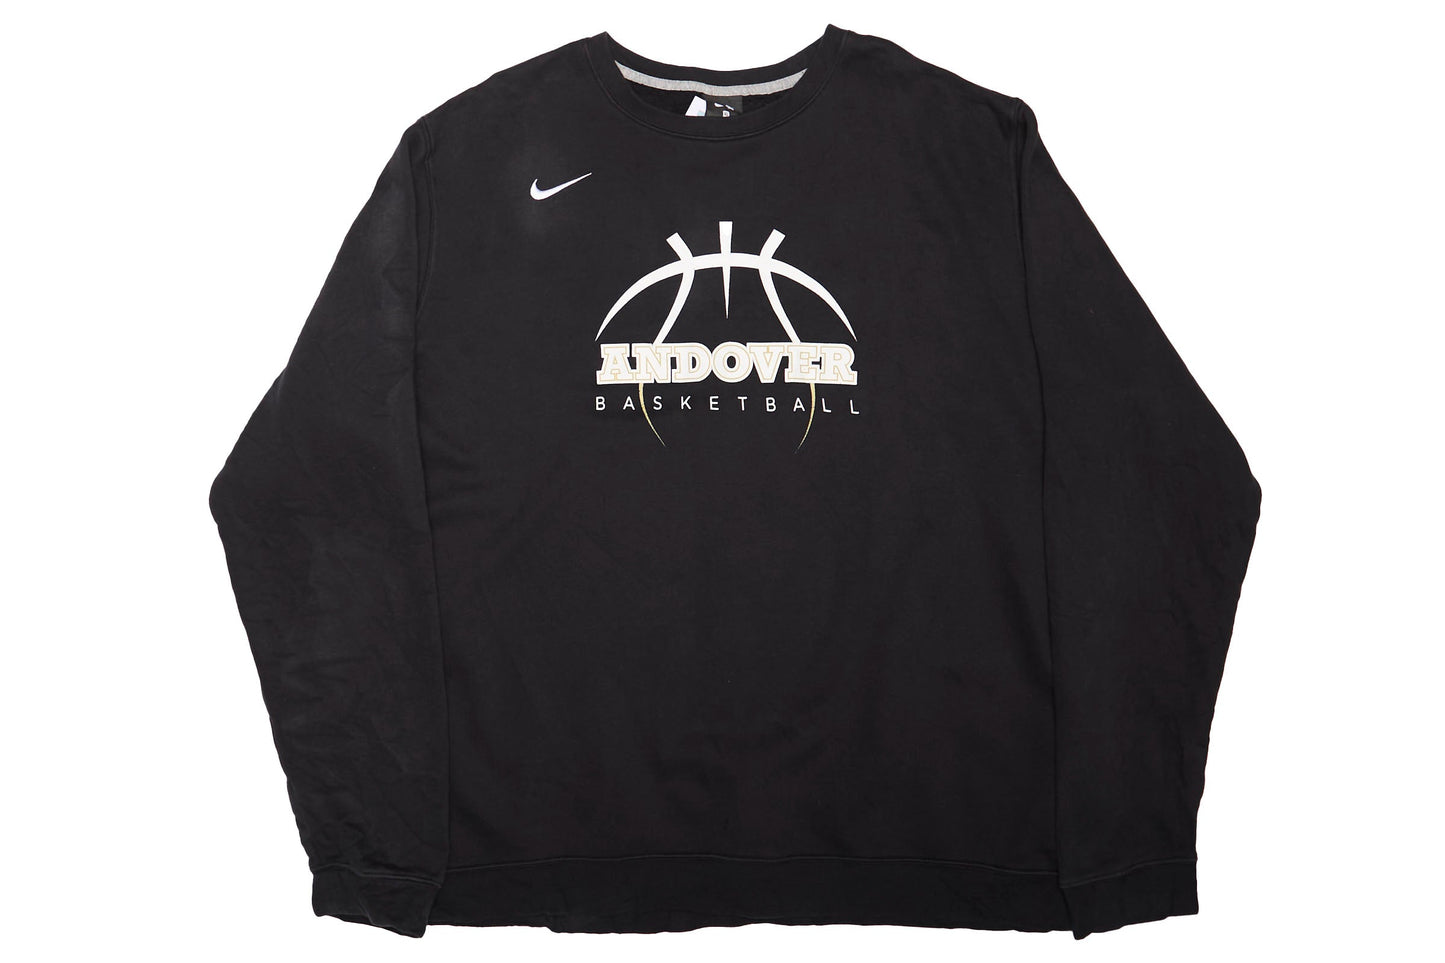 Mens Nike Andover Sweatshirt - XL